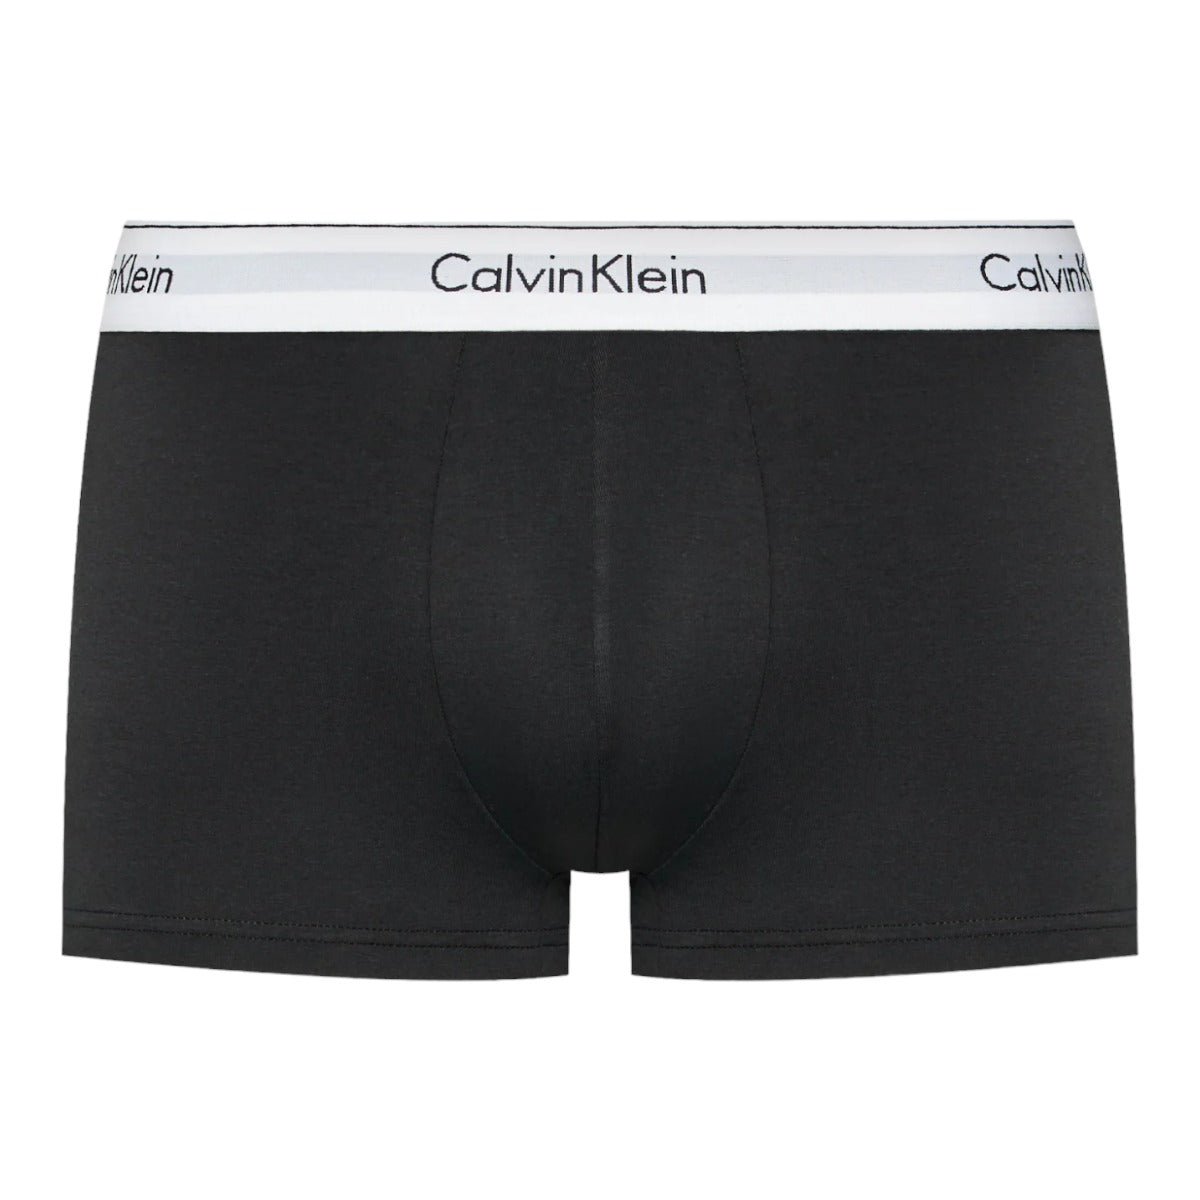 Calvin Klein Modern Cotton Stretch Boxers Black,Grey,White (3 Pack), Boinclo ltd